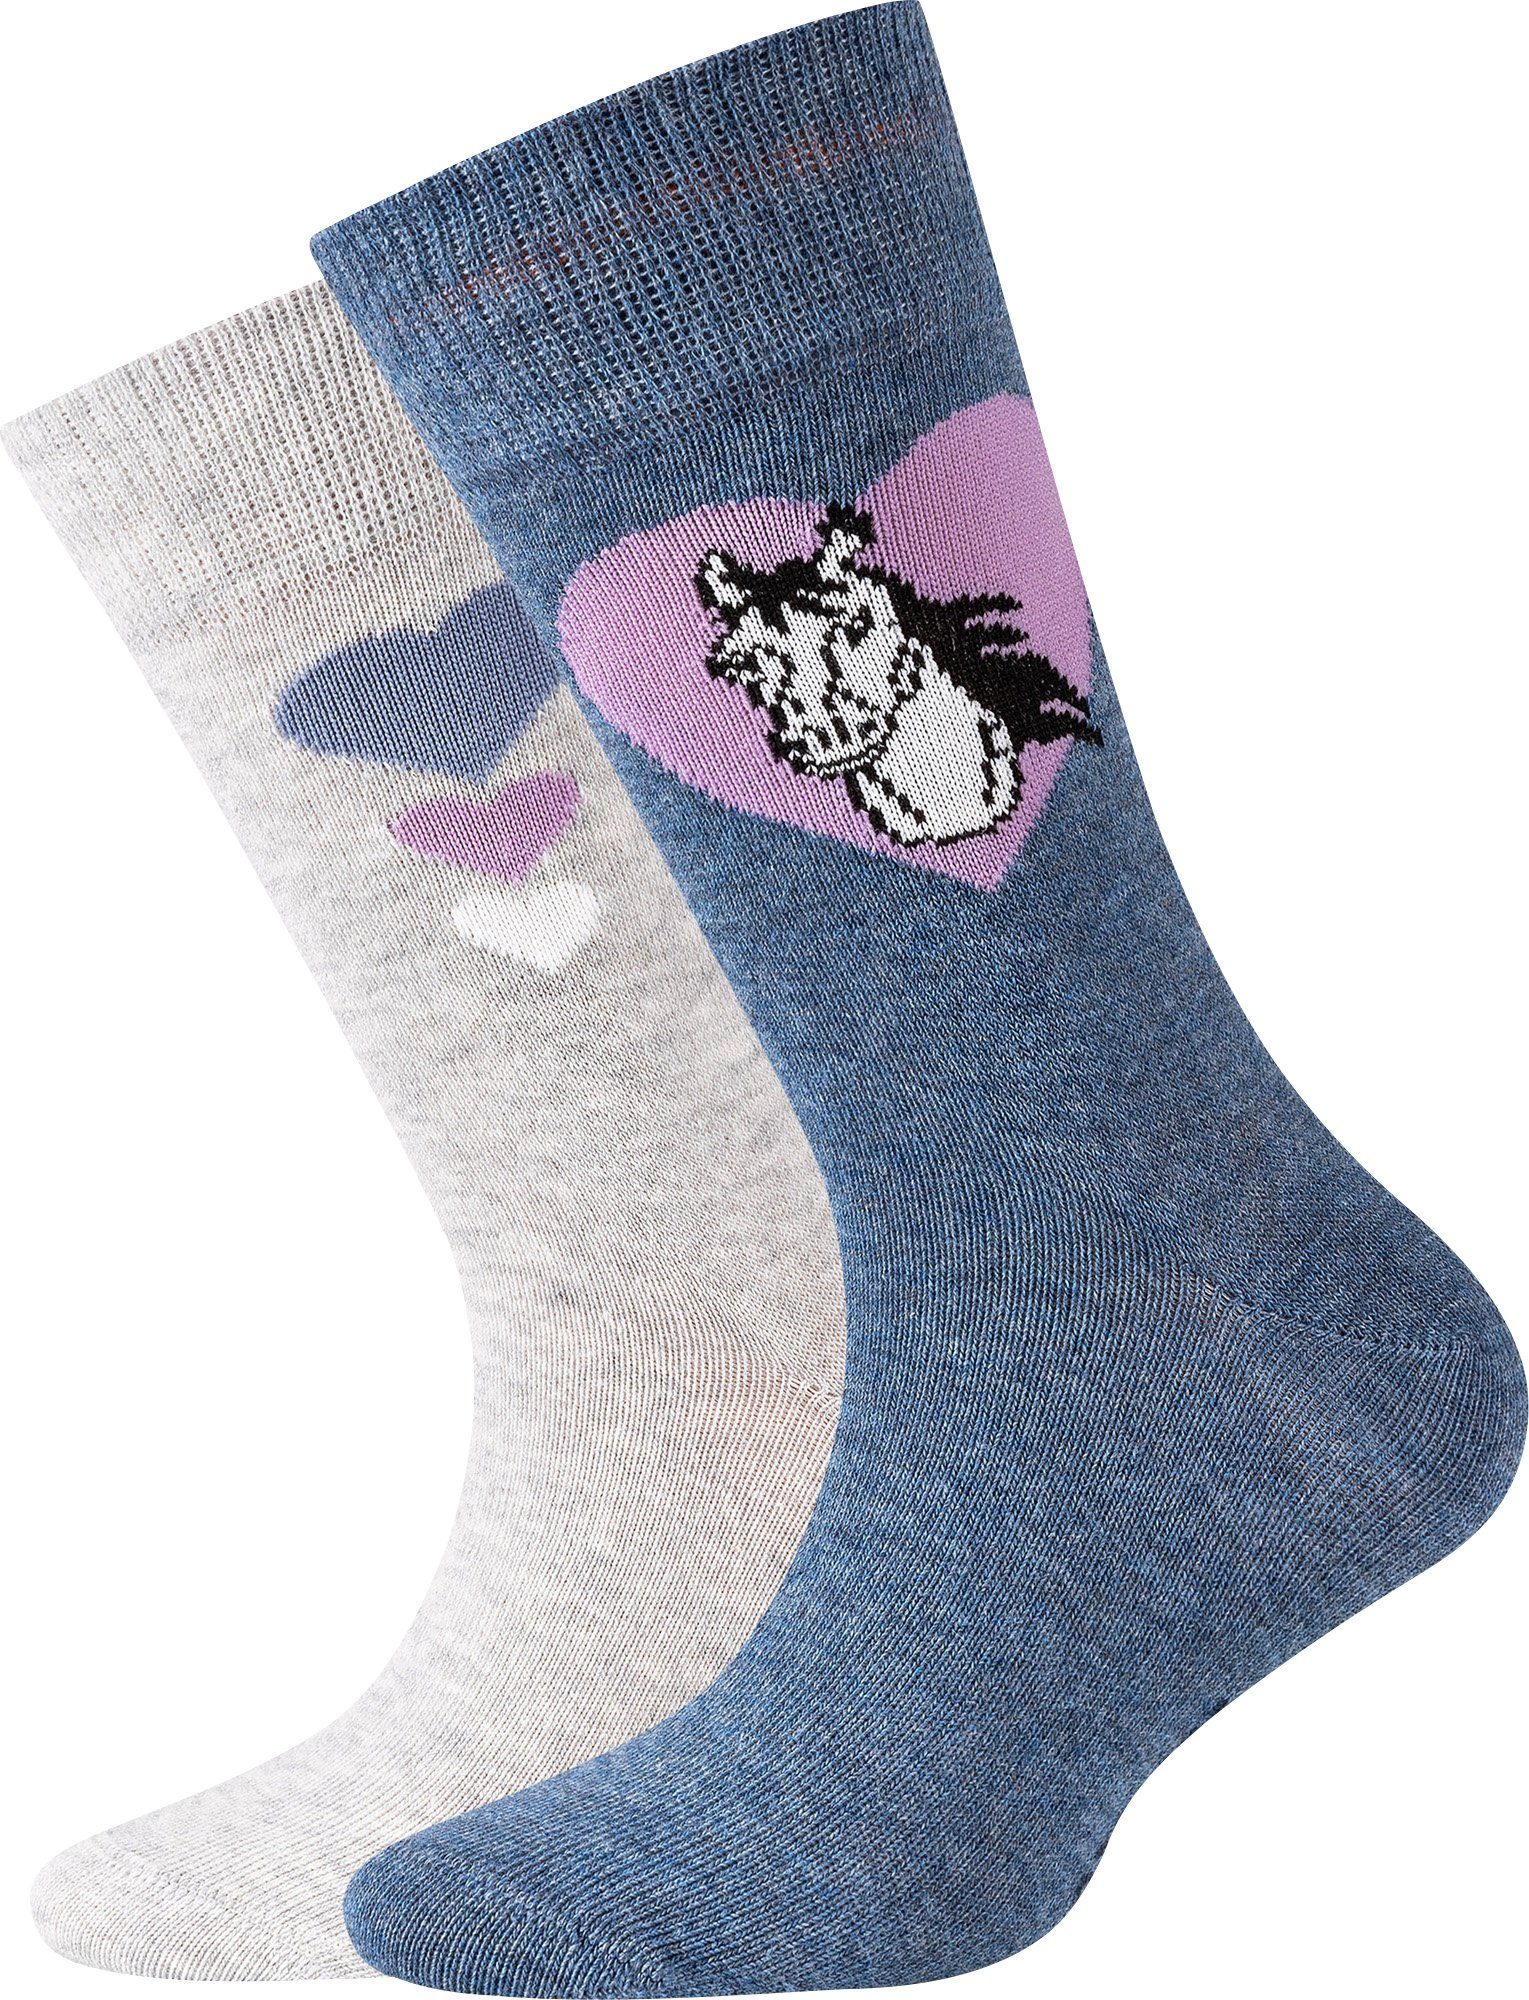 Camano Socken Kinder-Socken 2 Paar Motiv: Pferd, Herzen jeansblau/hellgrau meliert